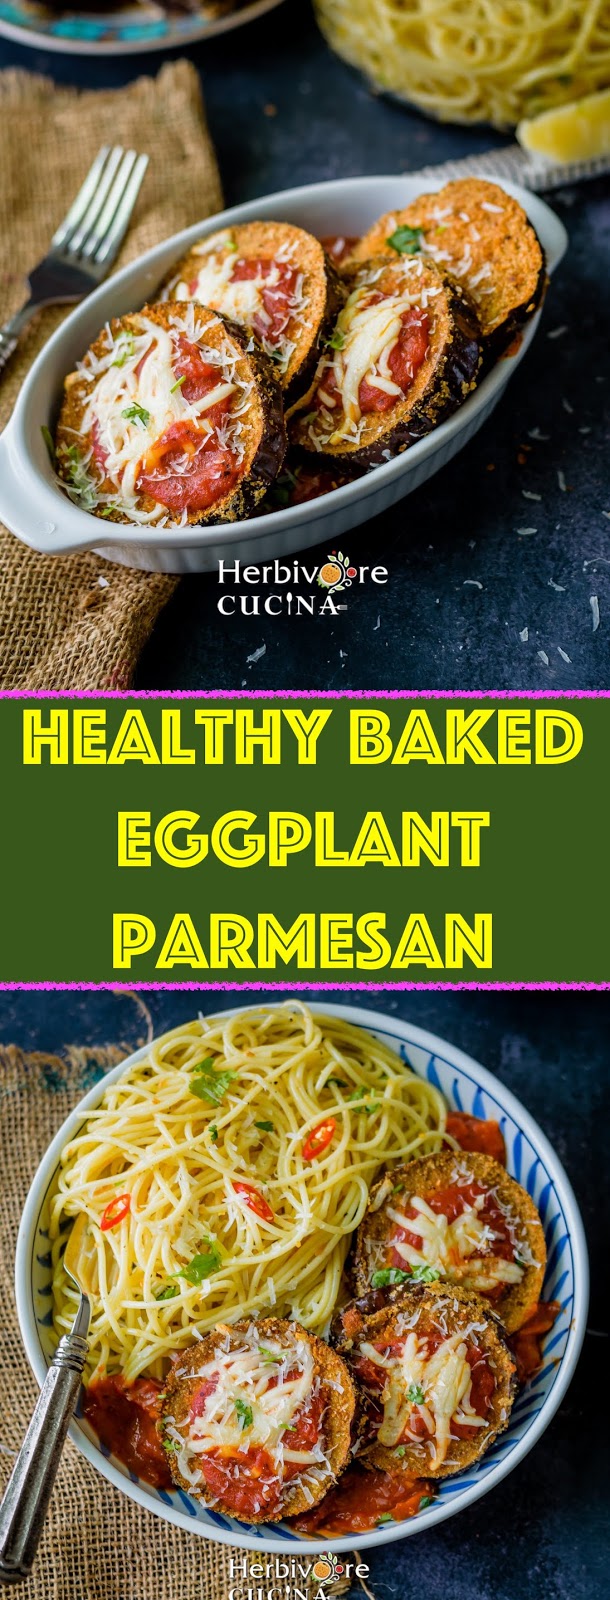 Healthy BAKED Eggplant Parmesan